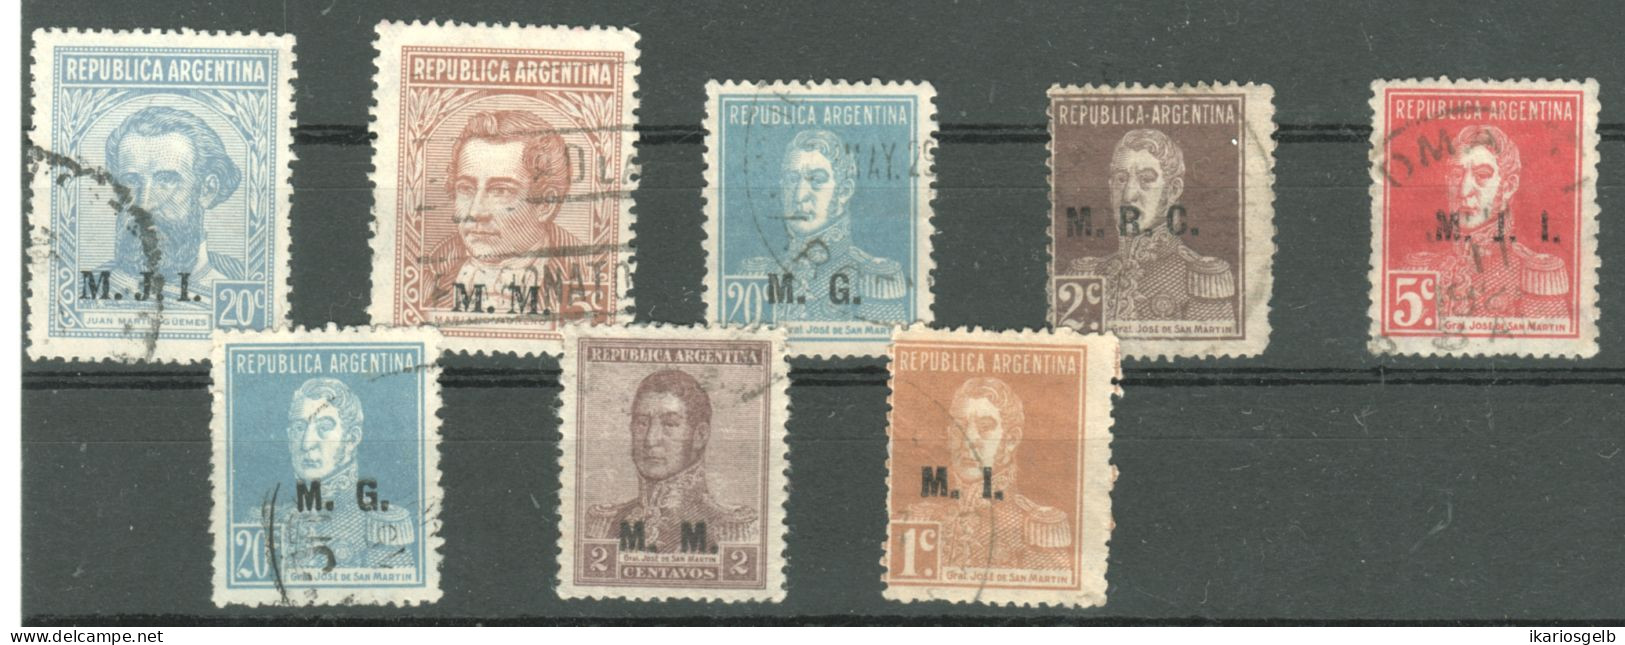 ARGENTINIEN Argentina ~1924 Lot 8 Marken + Ministerial-Aufdrucke M.I.I. - M.M. - M.G. - M.I. = Ministry Overprints - Servizio